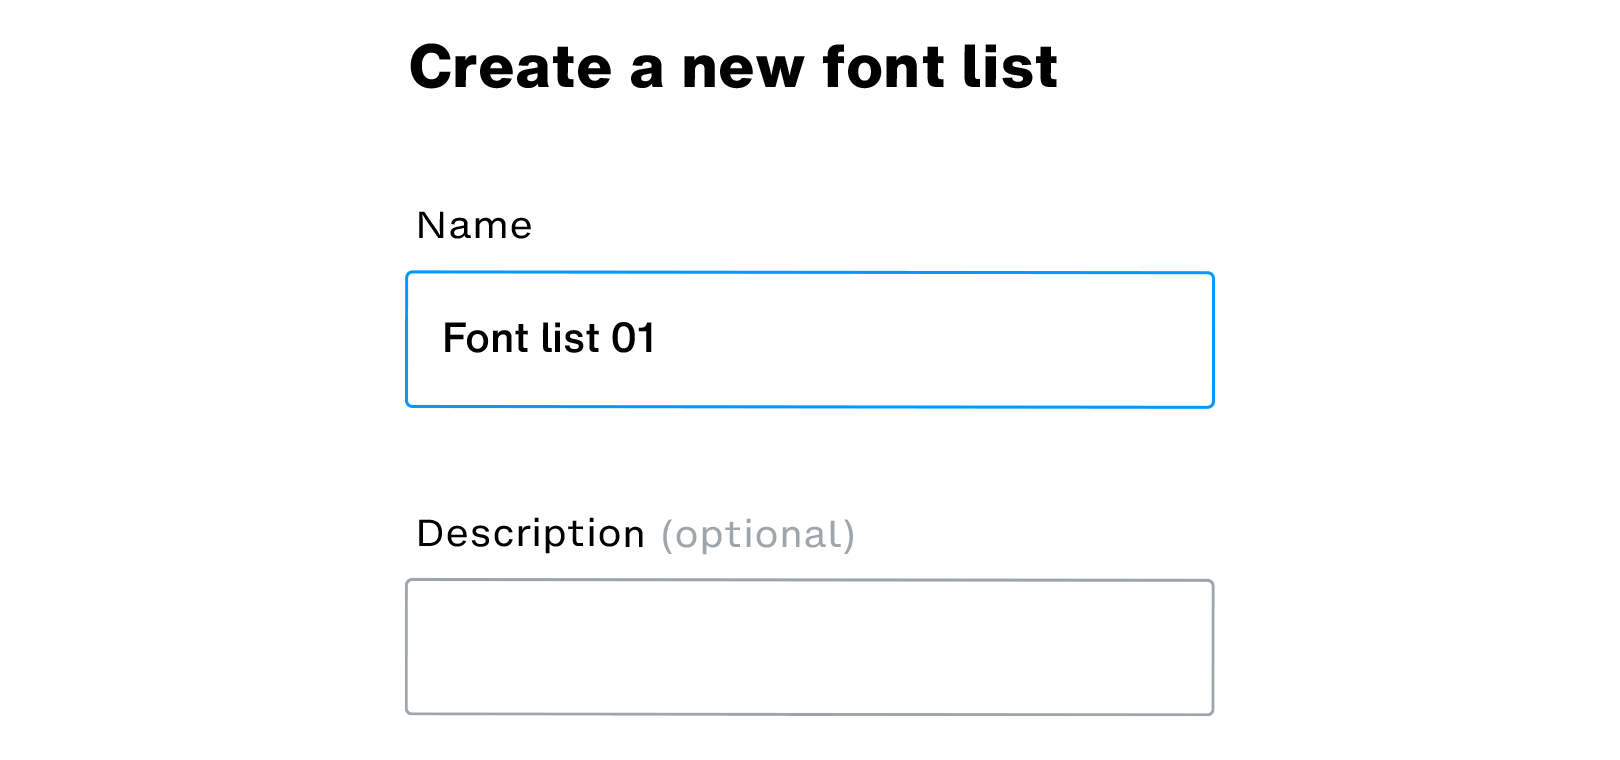 Create new font 01